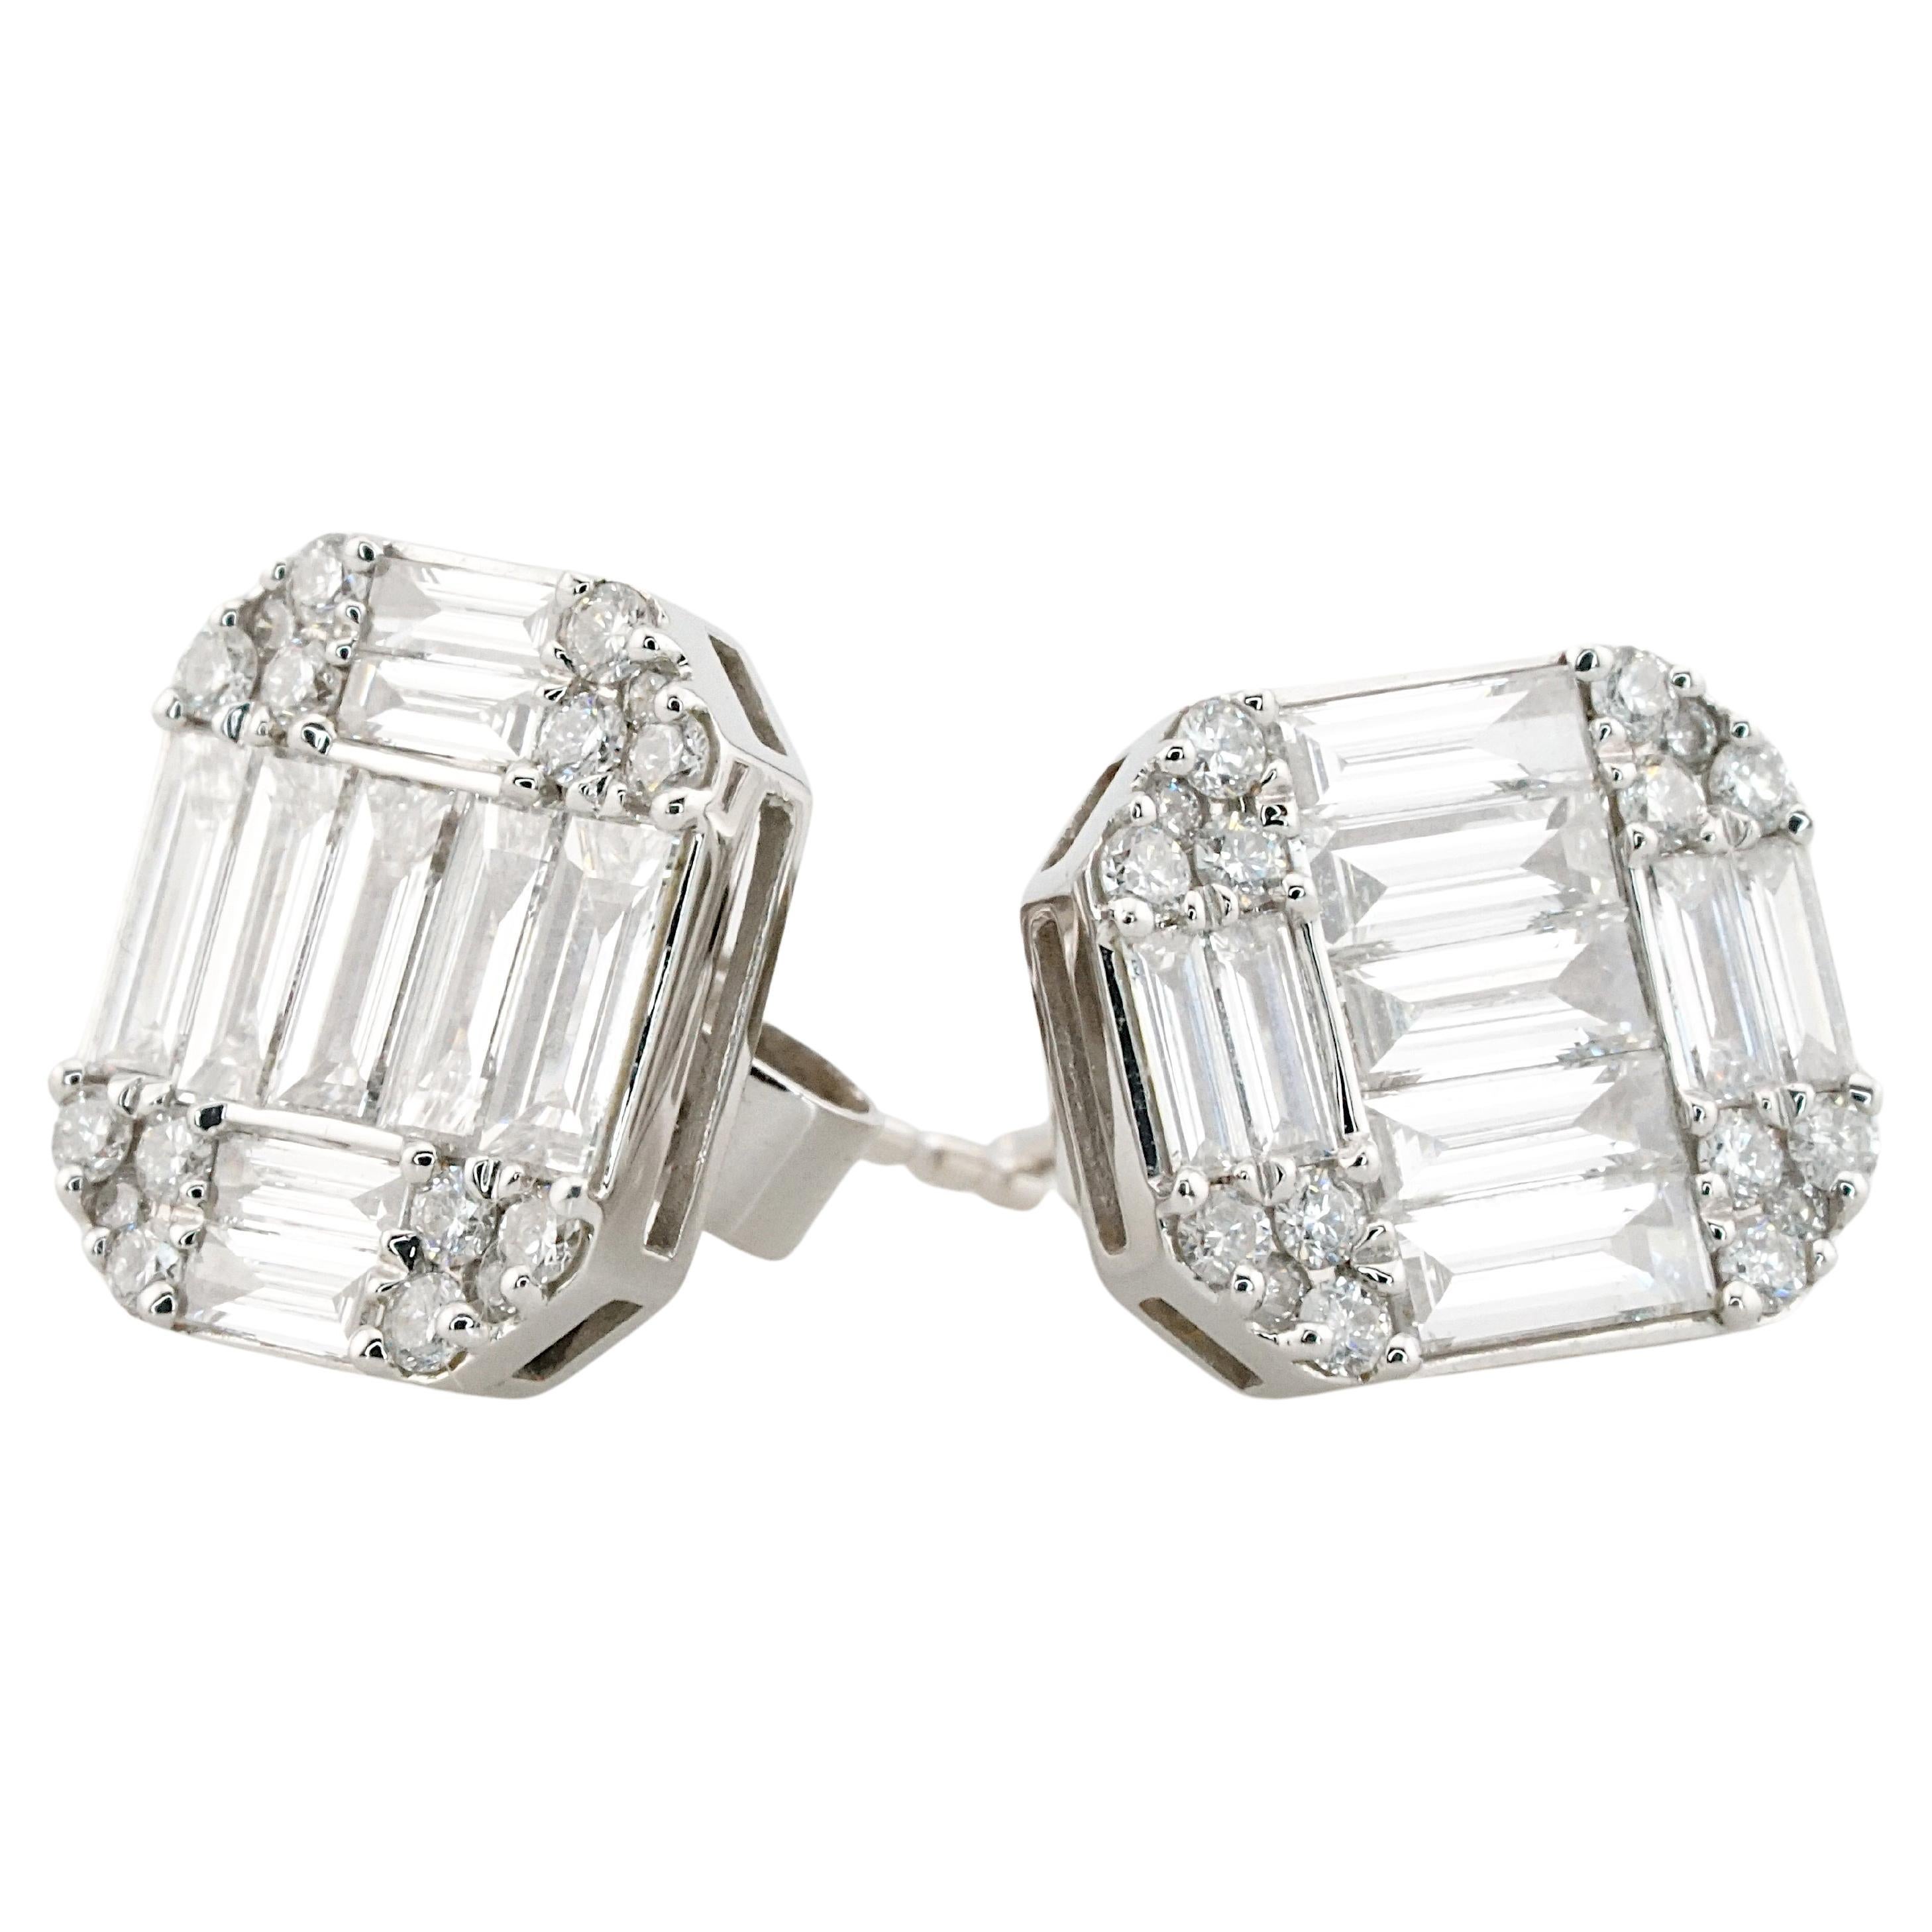 1.46 Carat Baguettes Diamonds 18K White Gold Magic Earrings